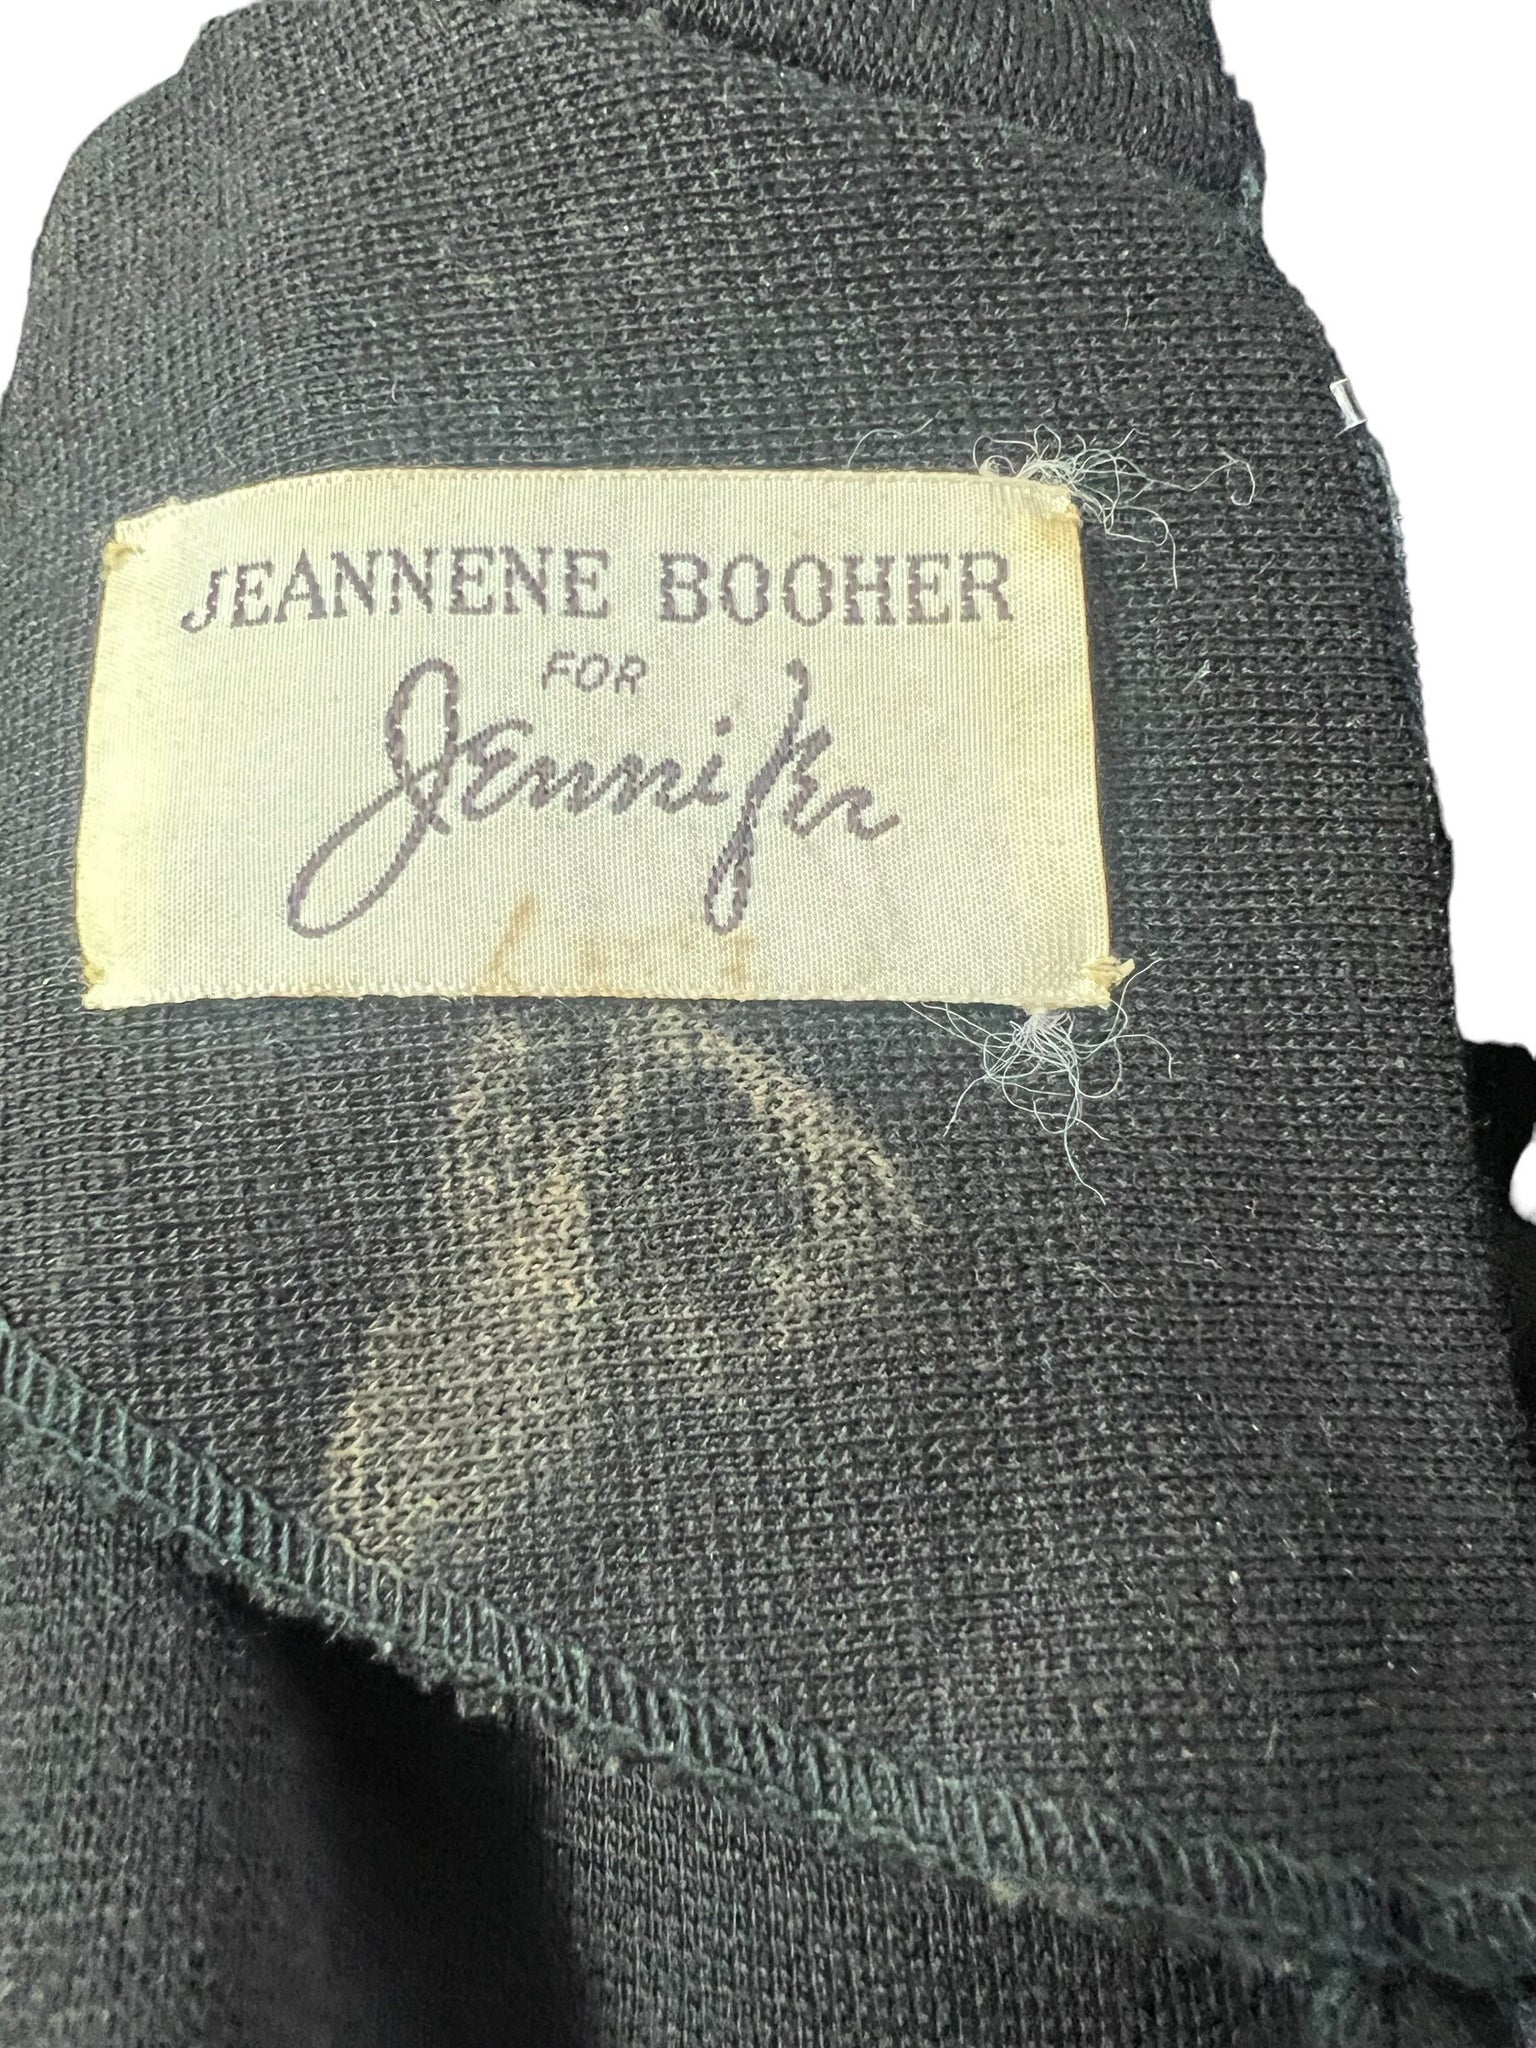 Vintage 70's black jumpsuit Jeannene Booher for Jennifer M